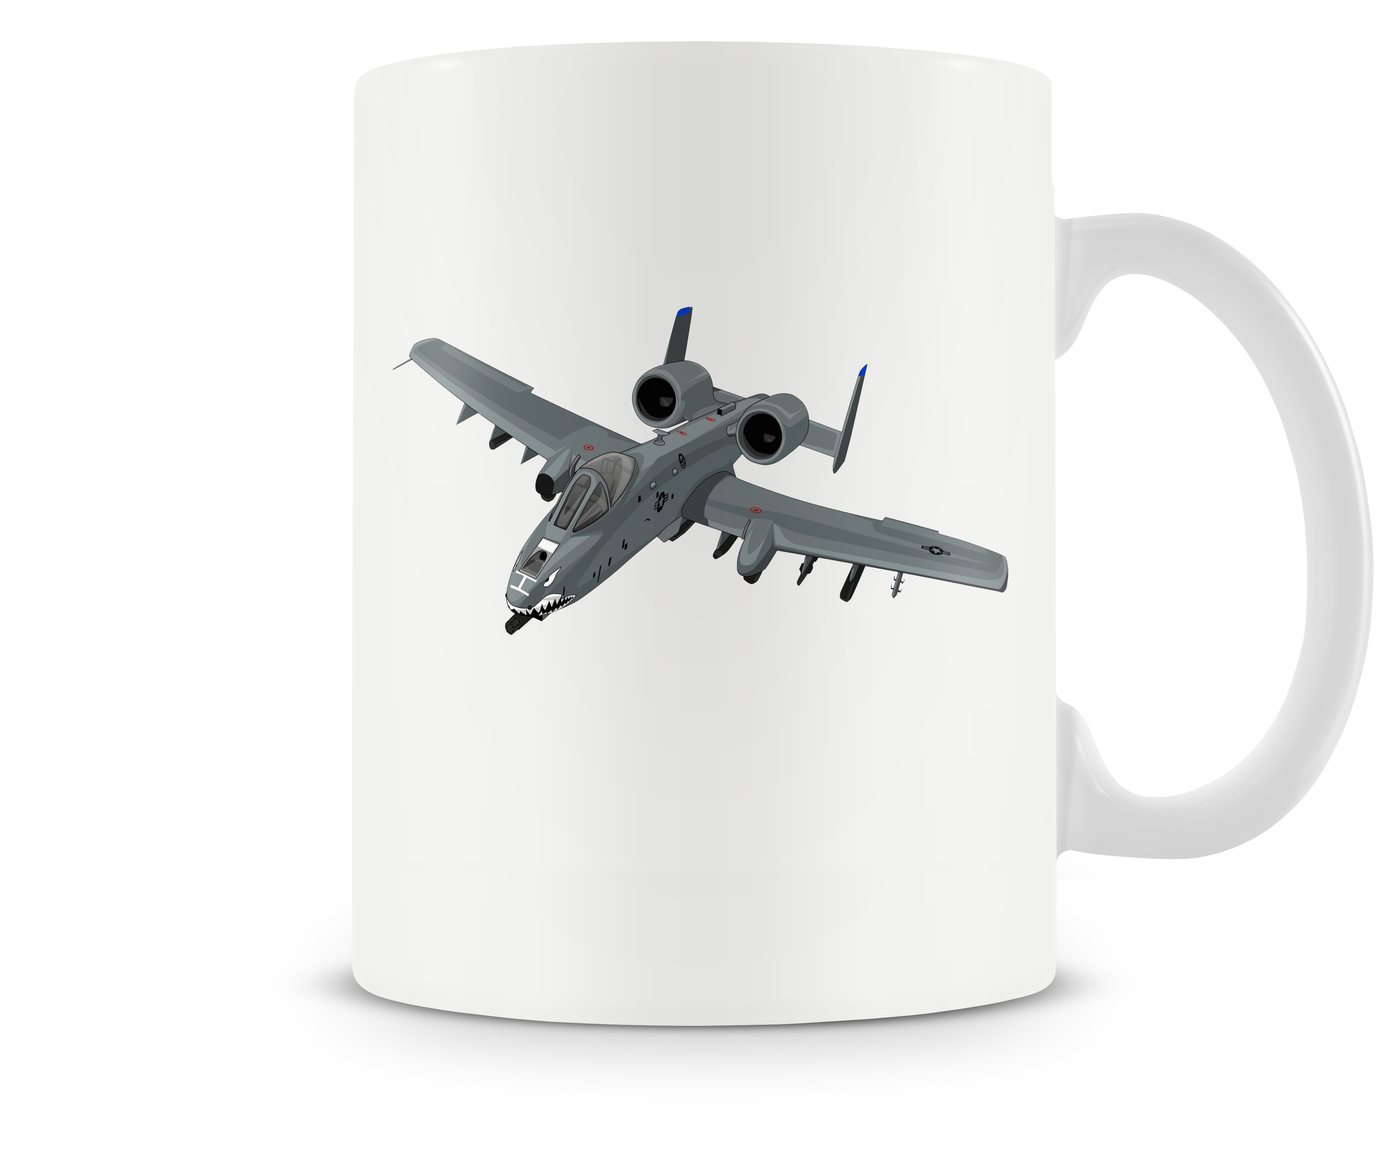 Fairchild A-10 Thunderbolt II Mug - Aircraft Mugs